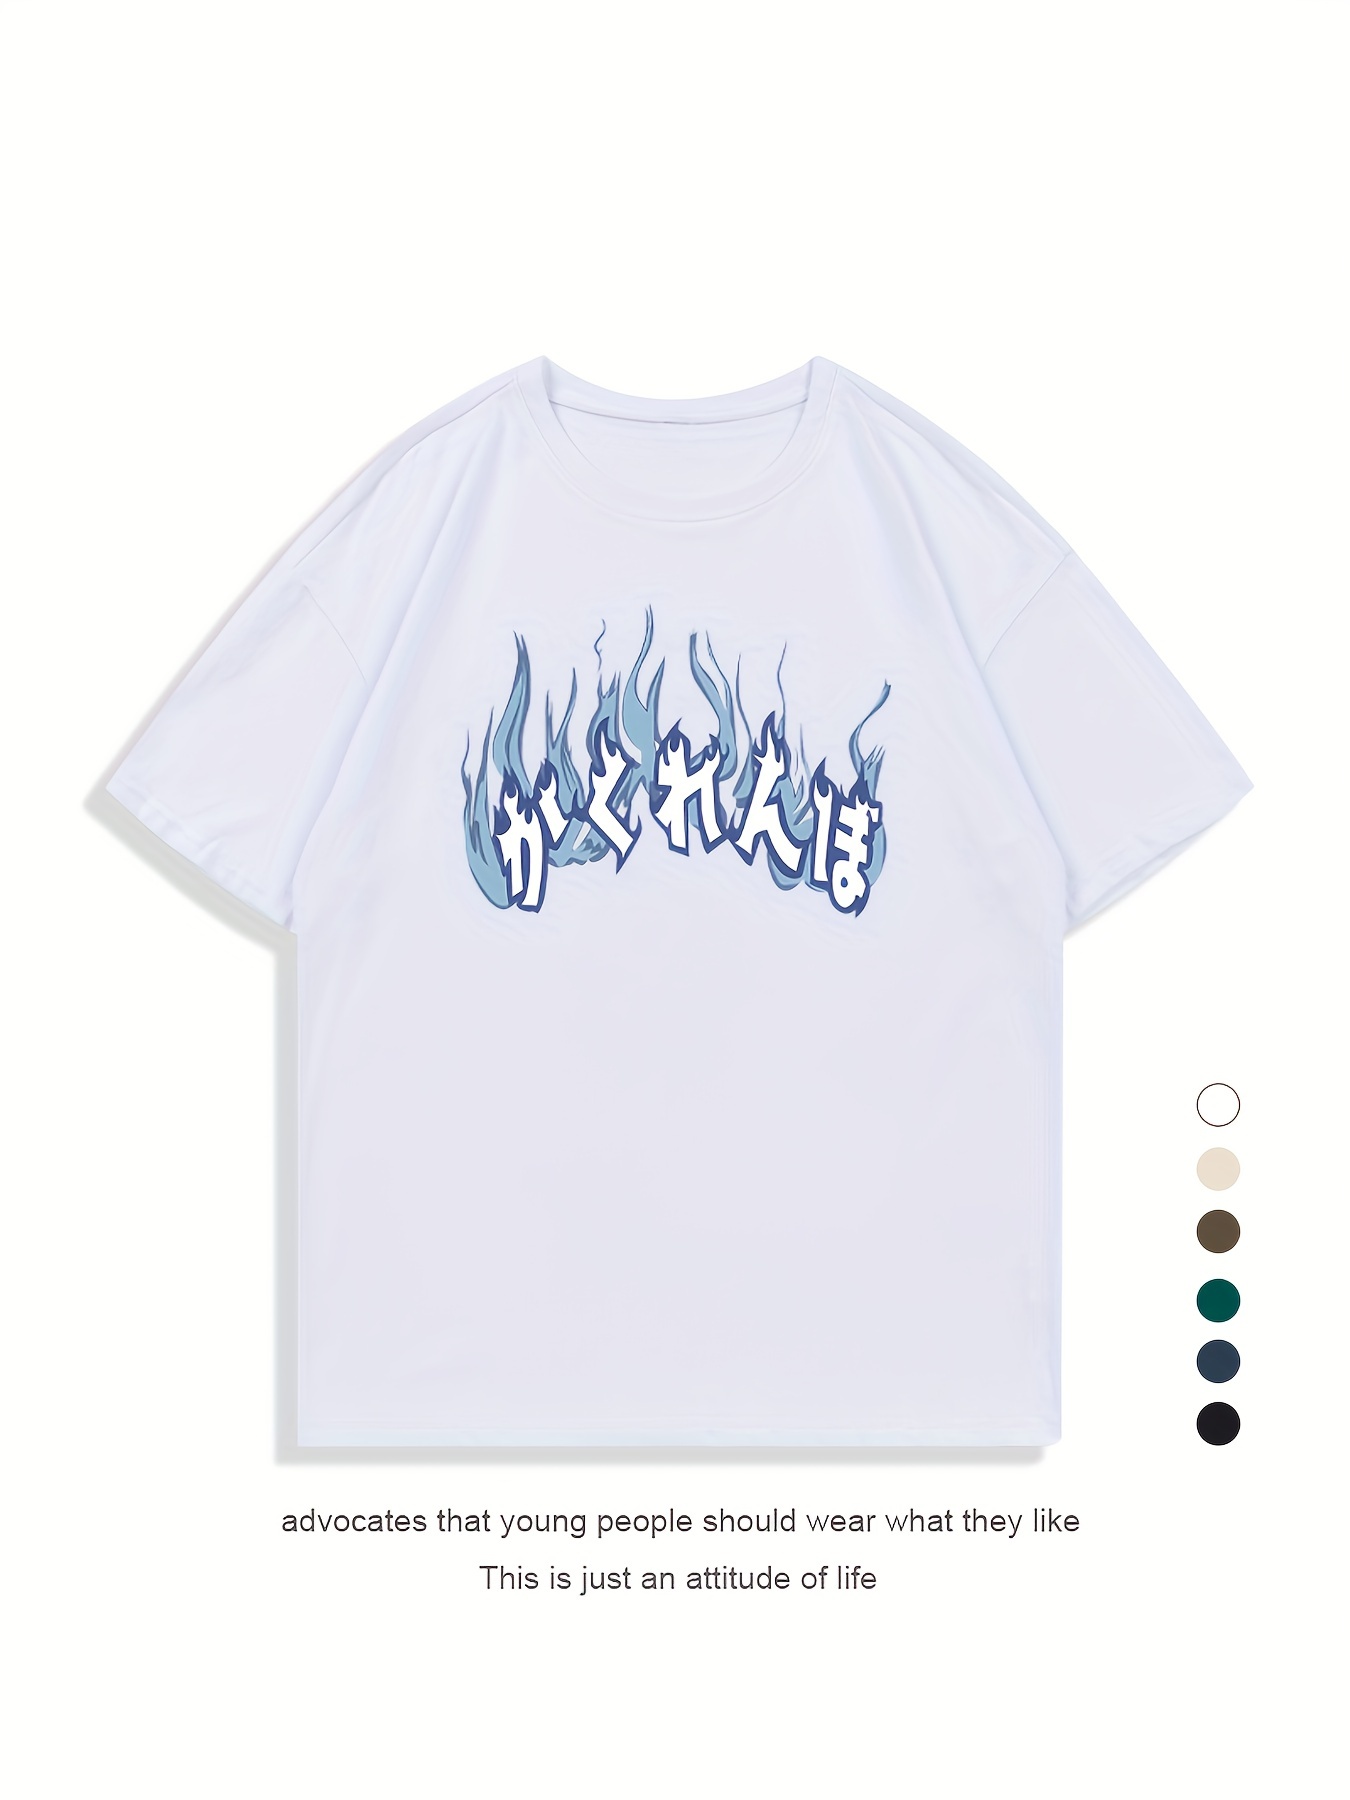  Blue Flame Fire Men's Short Sleeve Shirts Casual